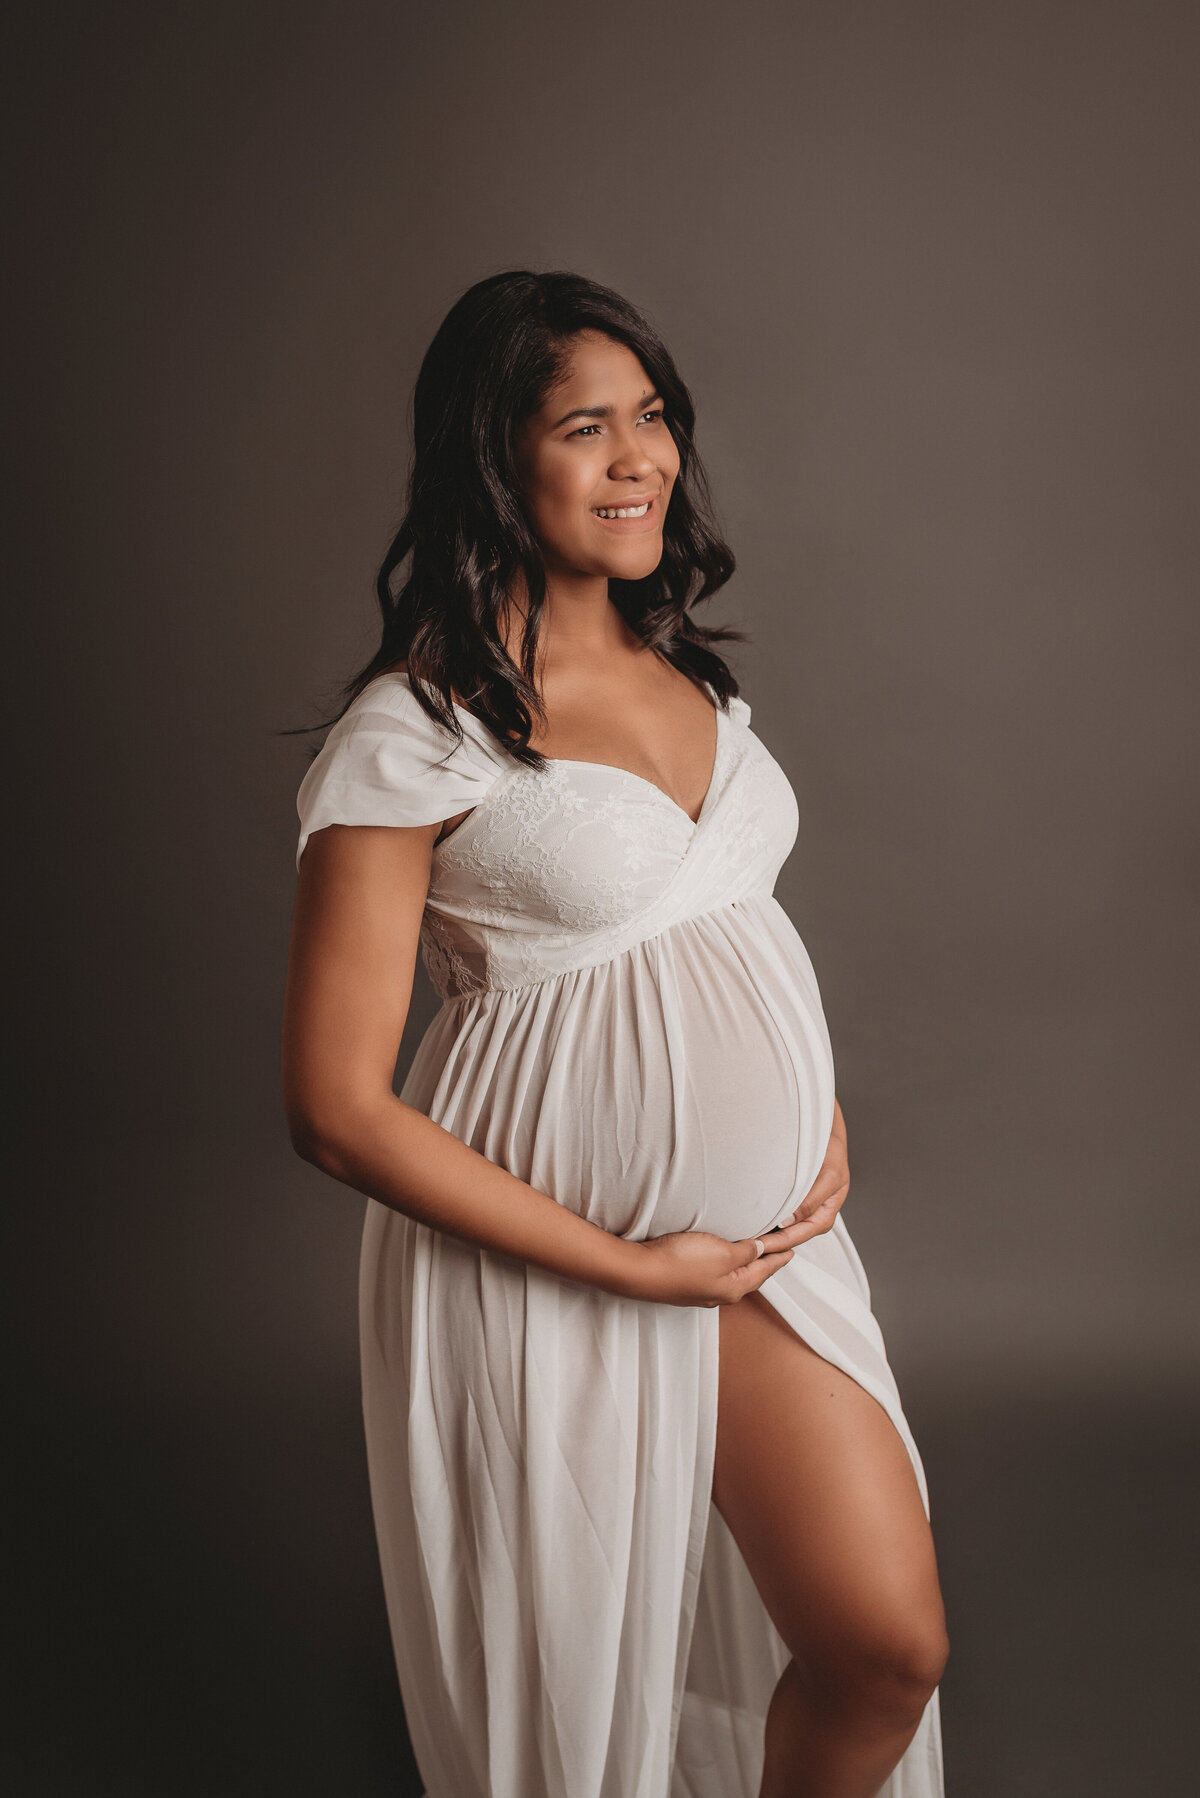 Pregnant woman wearing white sheer dress